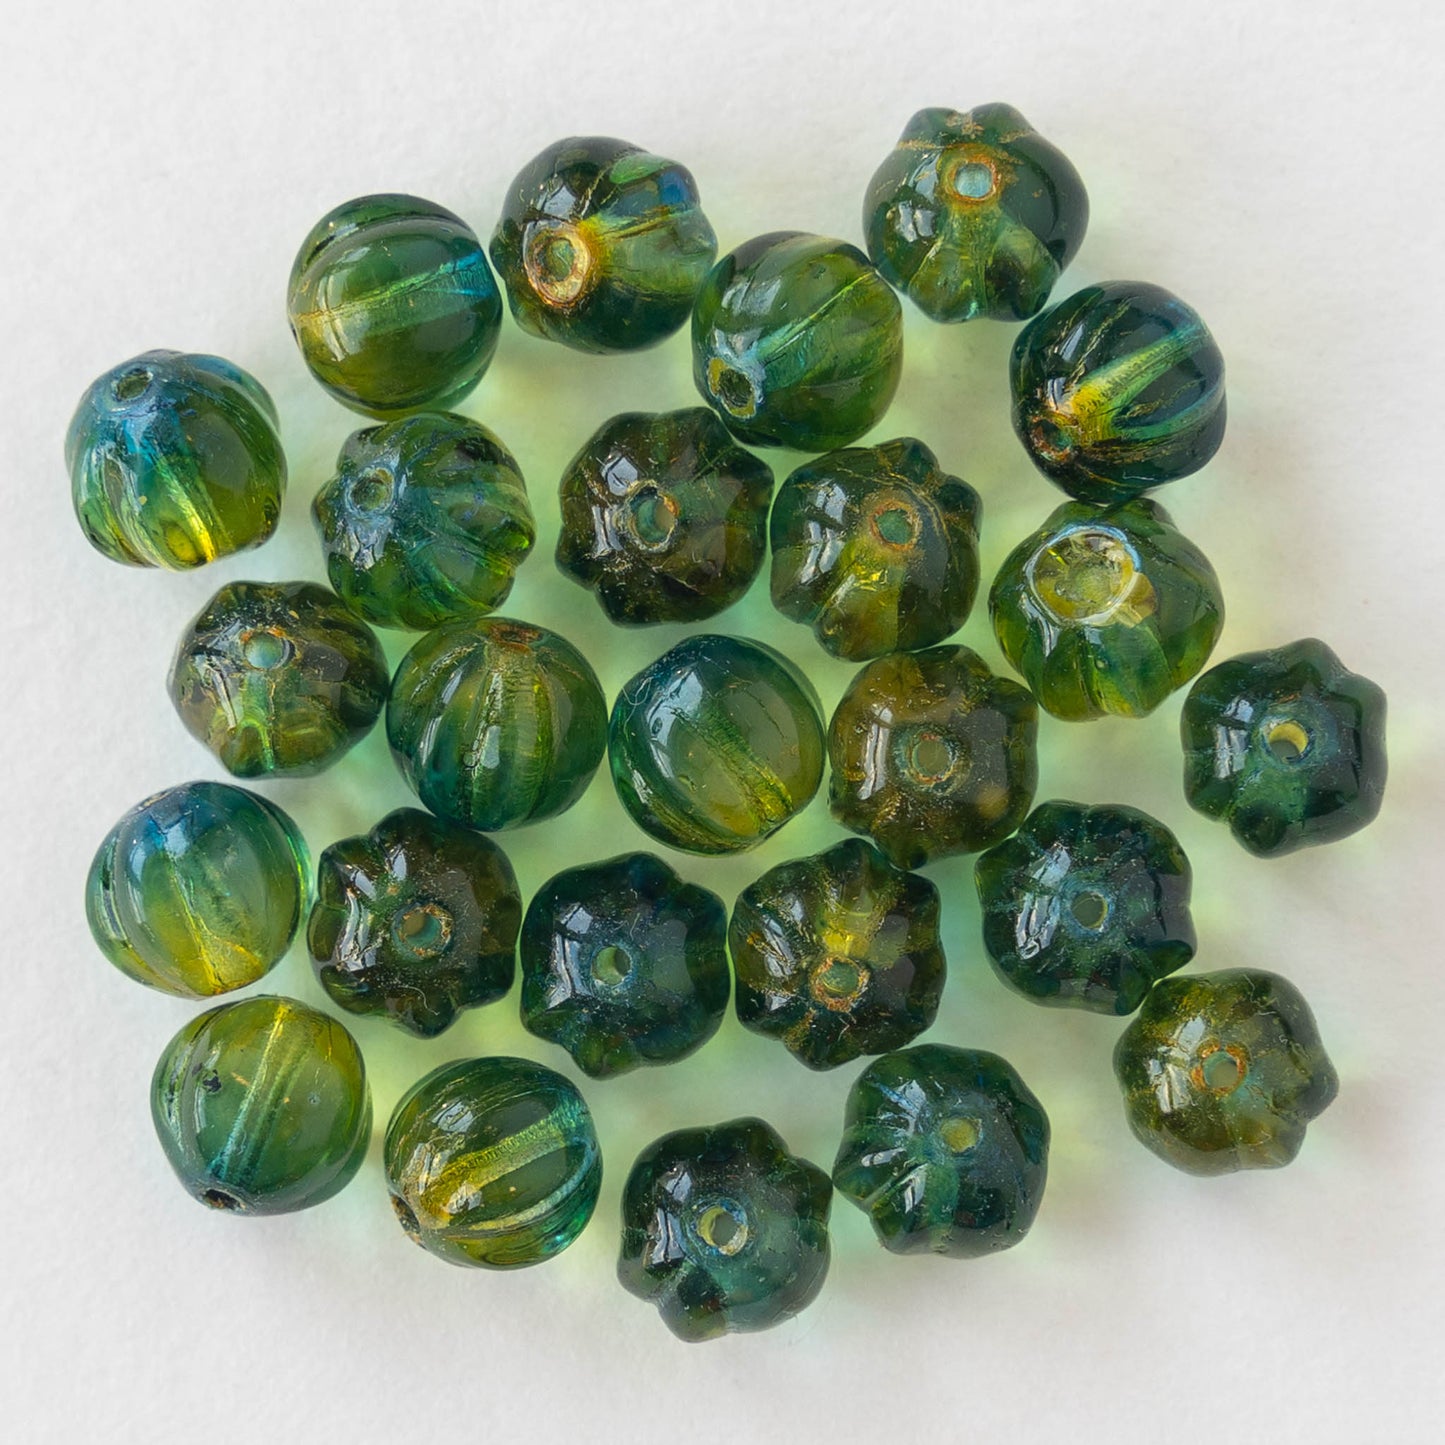 7mm Melon Bead - Green Blue Yellow Mix - 25 Beads